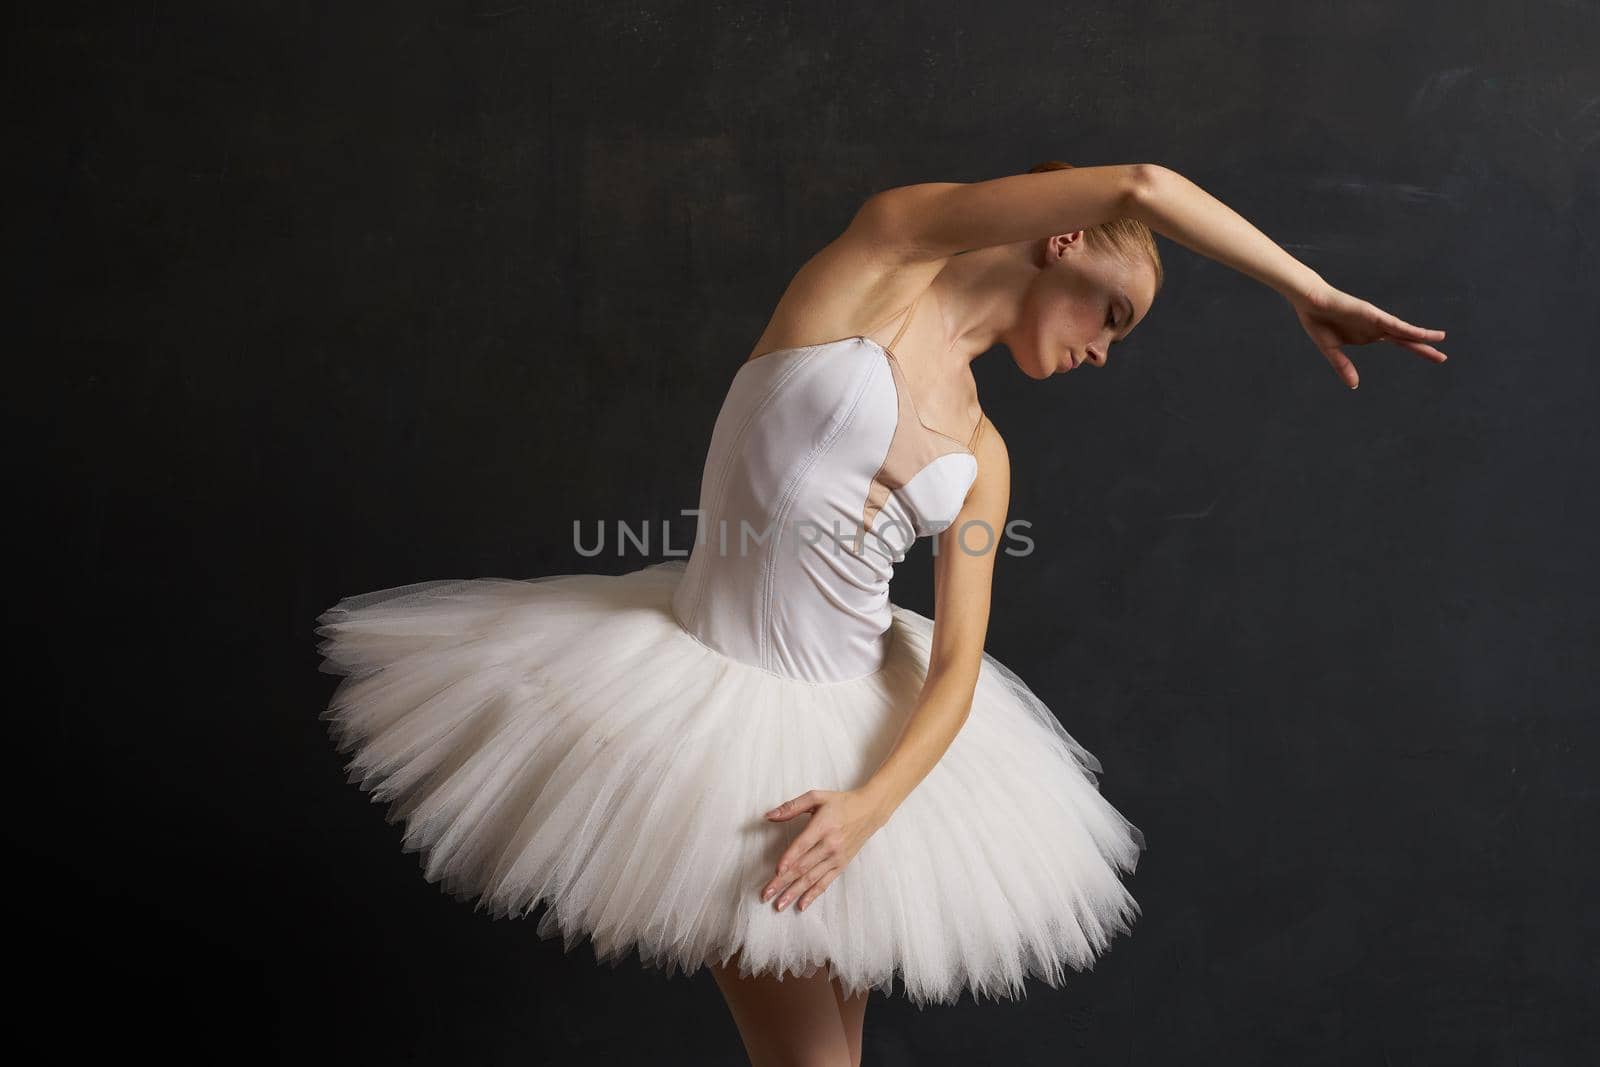 ballerina in a white tutu dance performance silhouette dark background by Vichizh